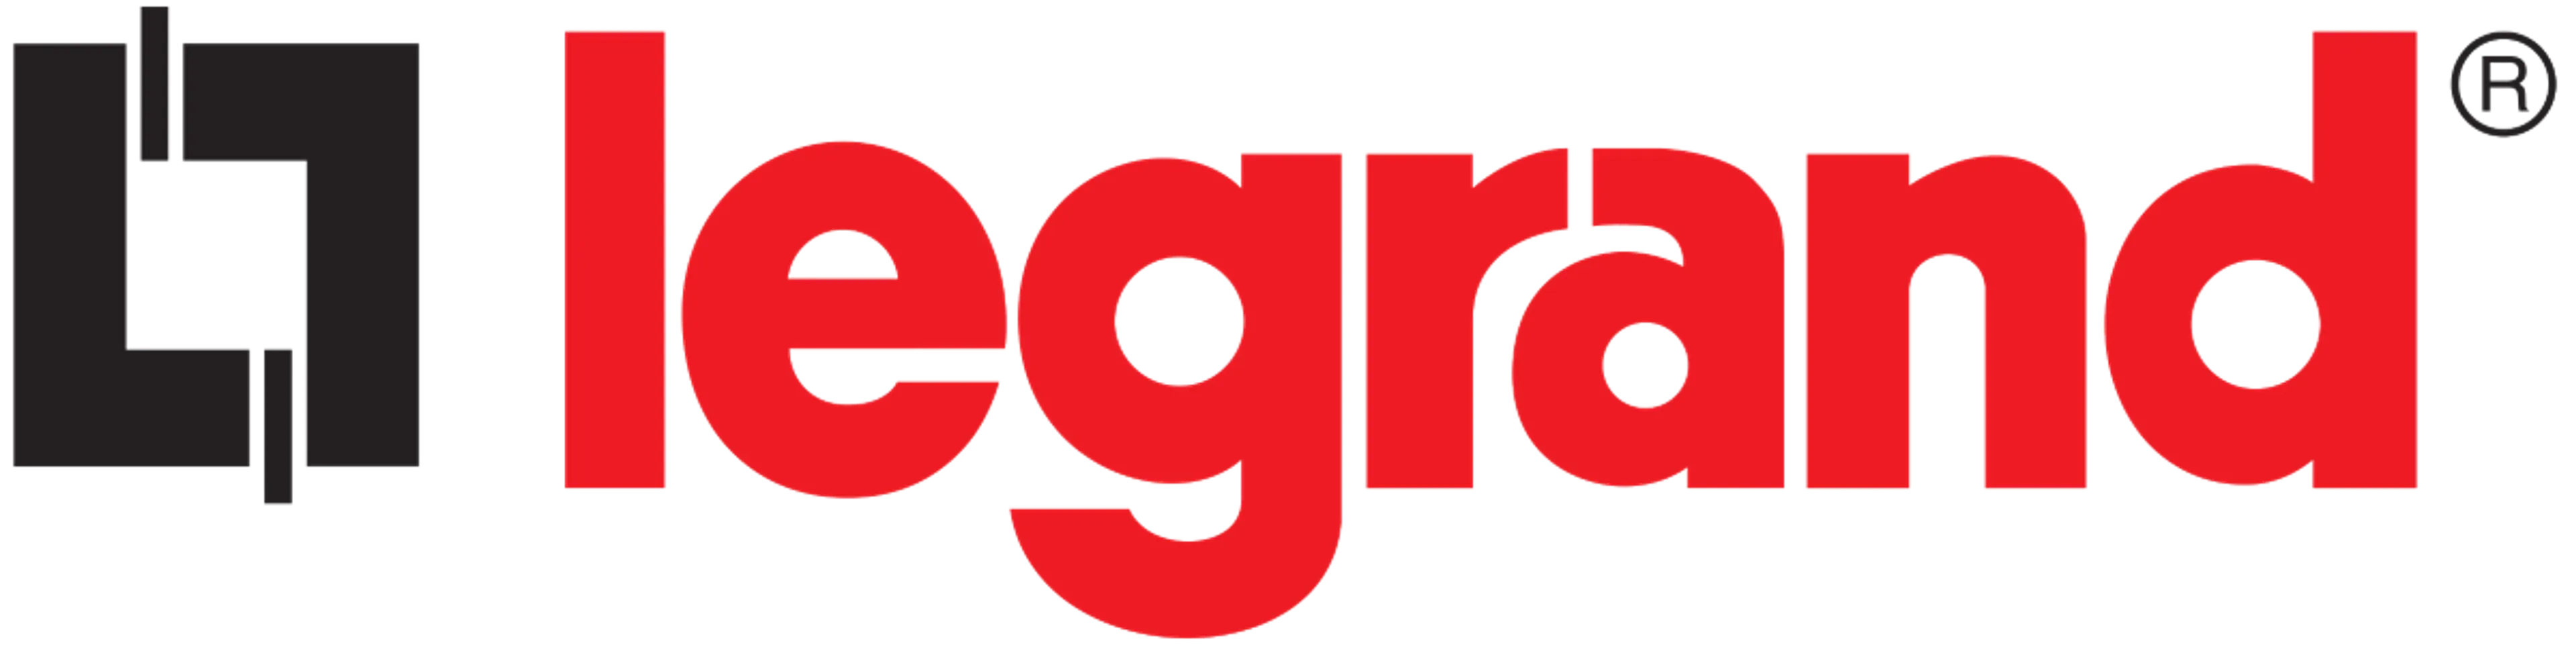 LEGRAND logo